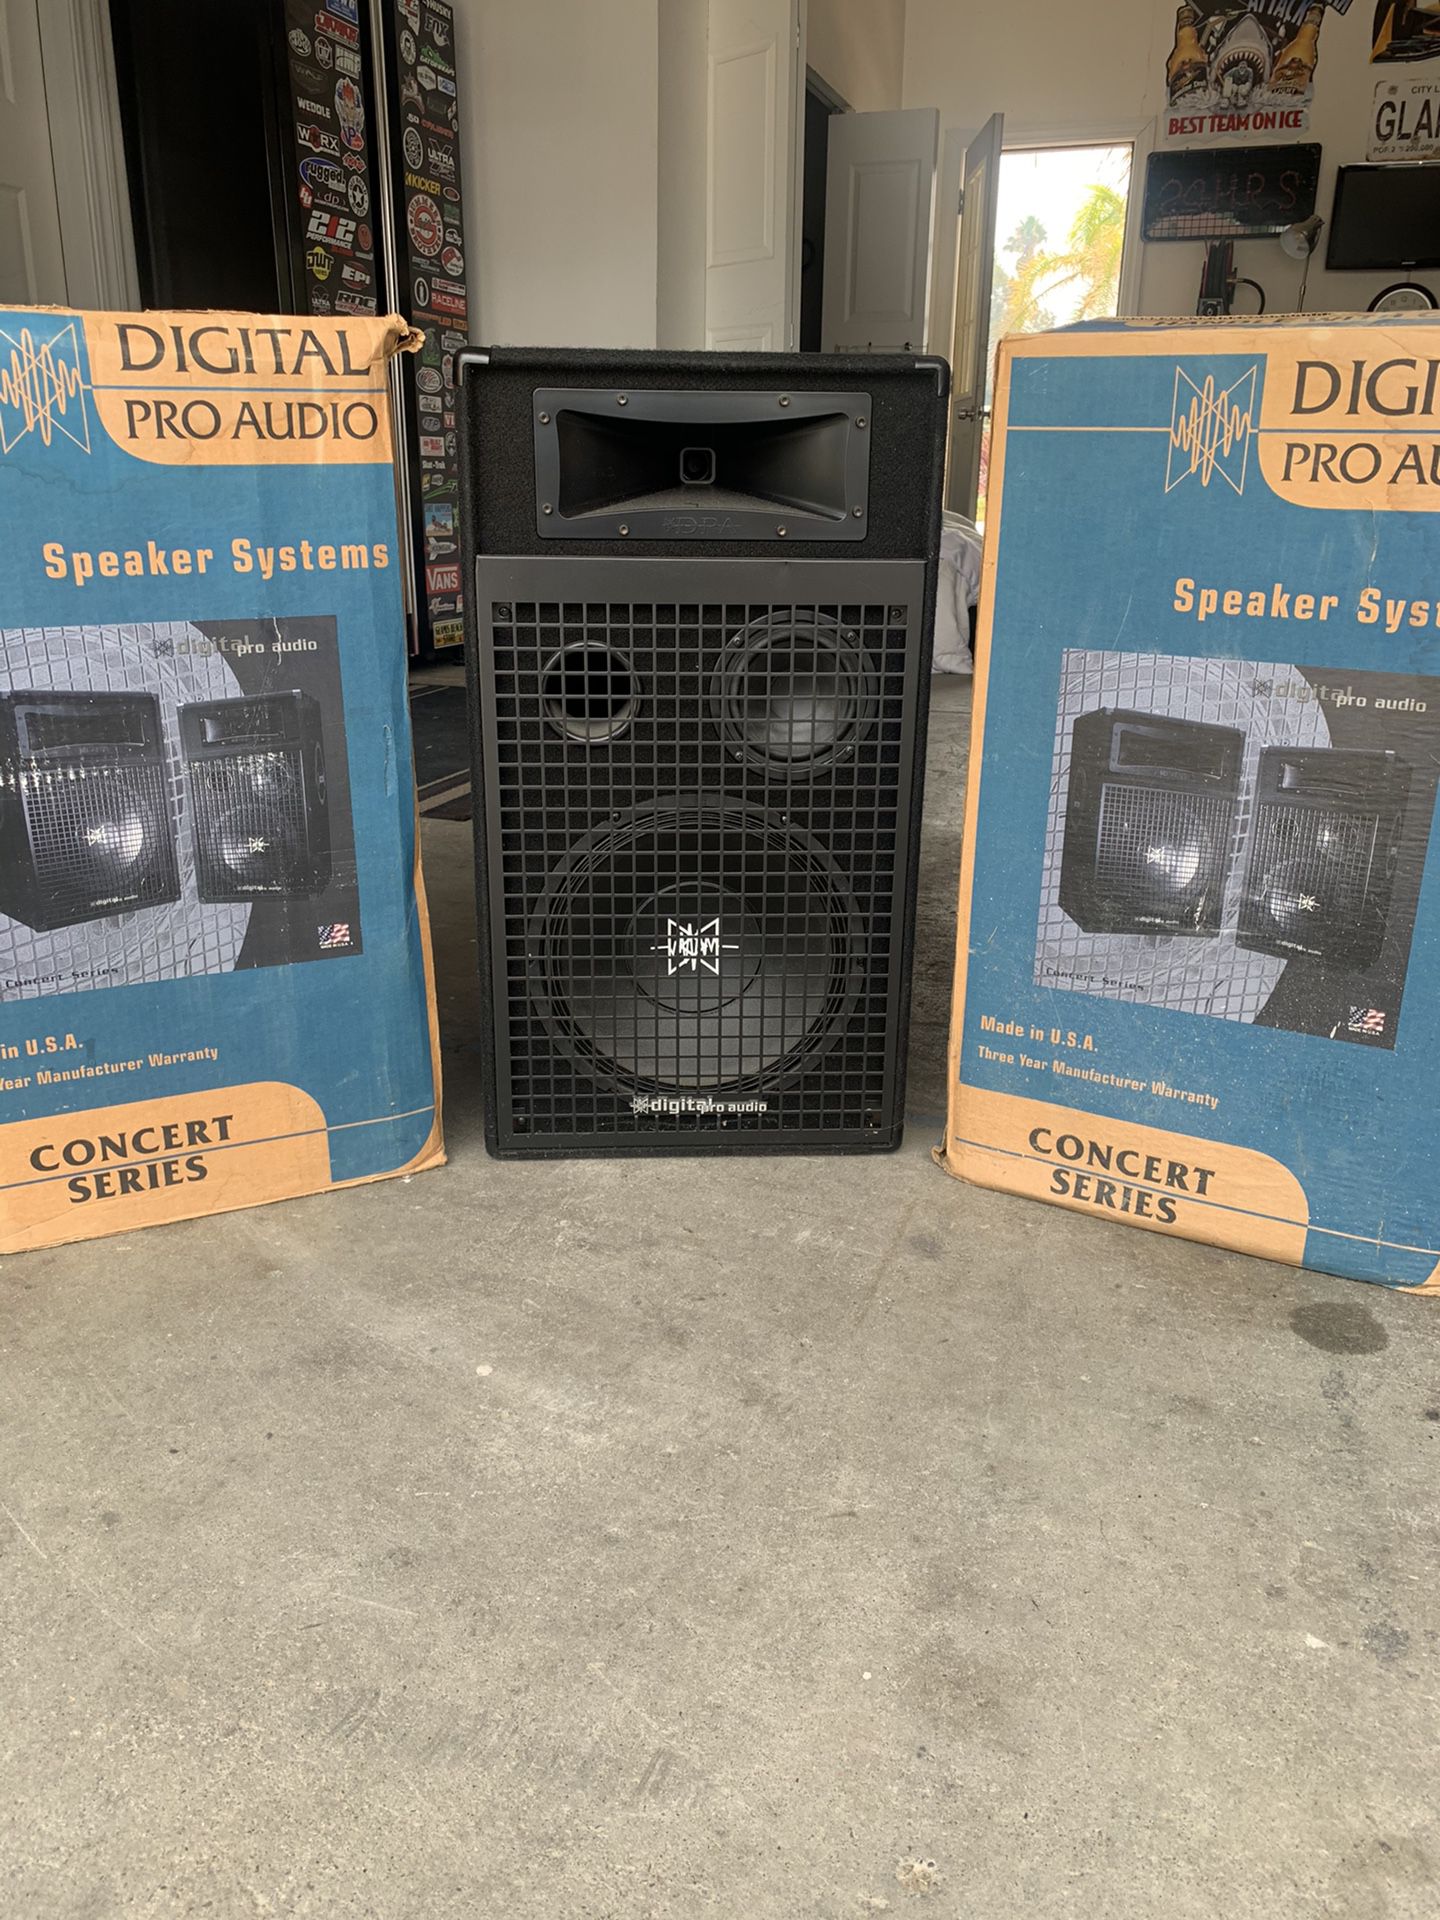 Digital pro audio concert series speakers